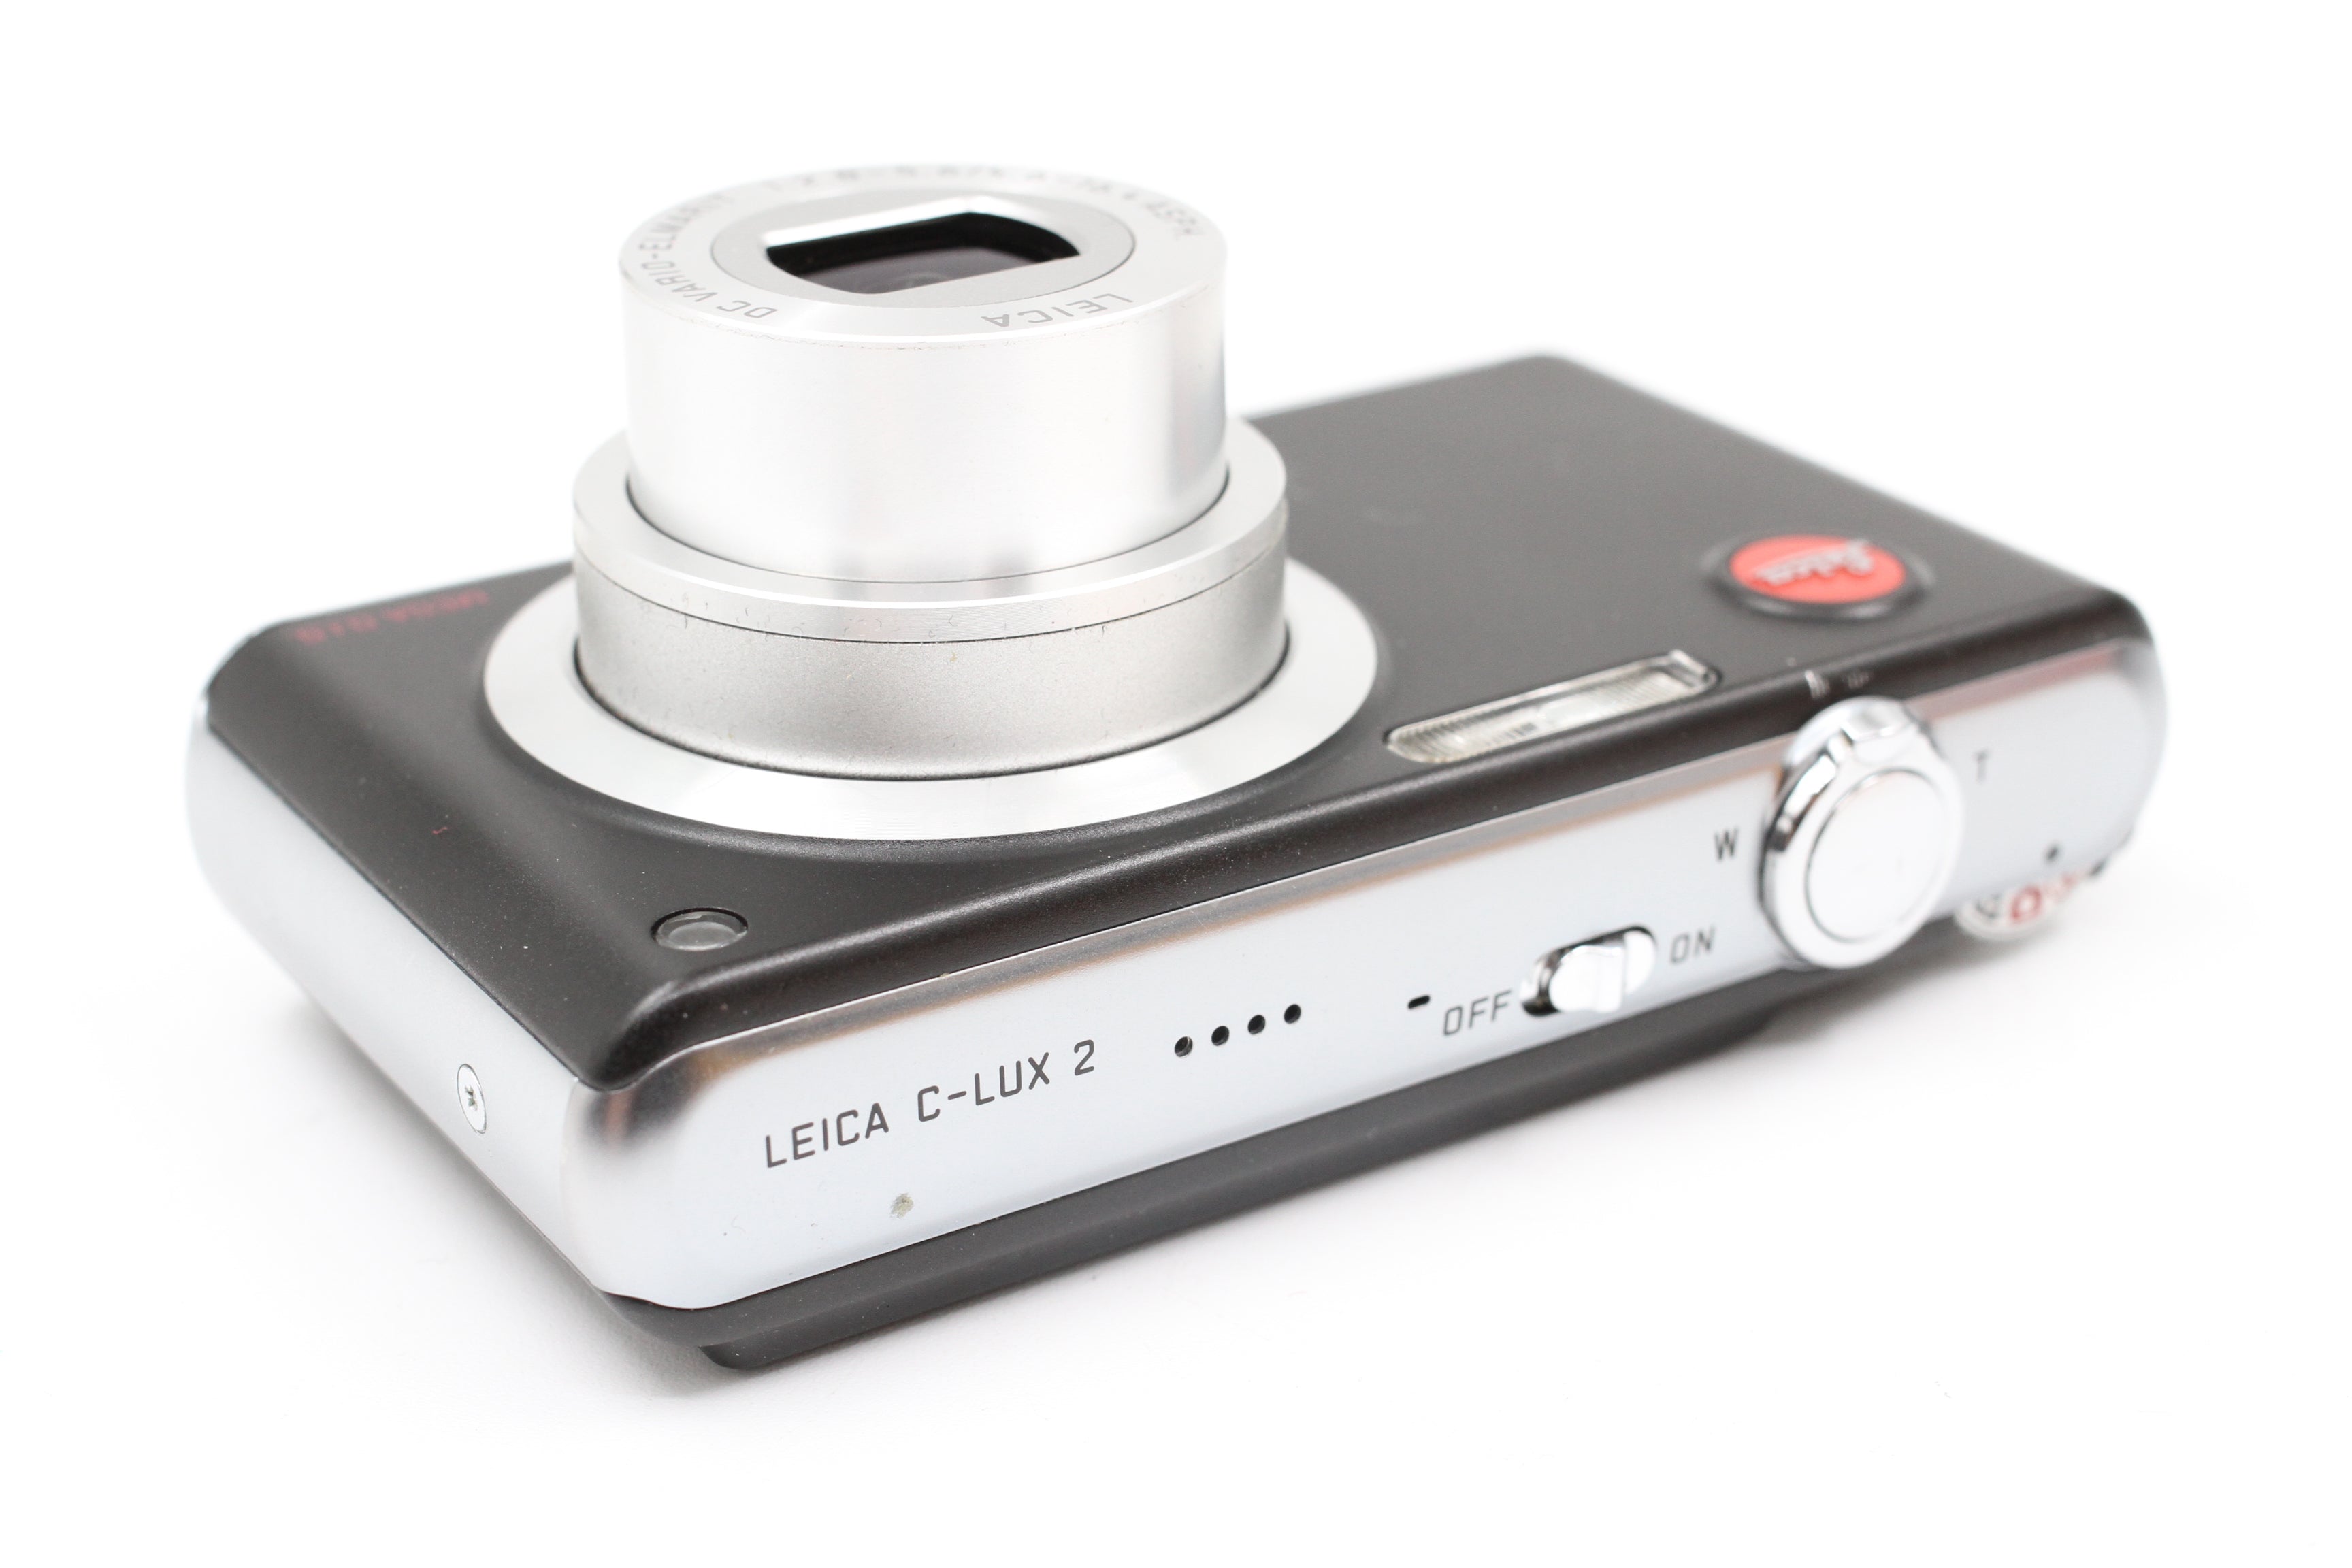 Leica C-LUX 2 Digital Compact Camera w/ Box & Leica Case